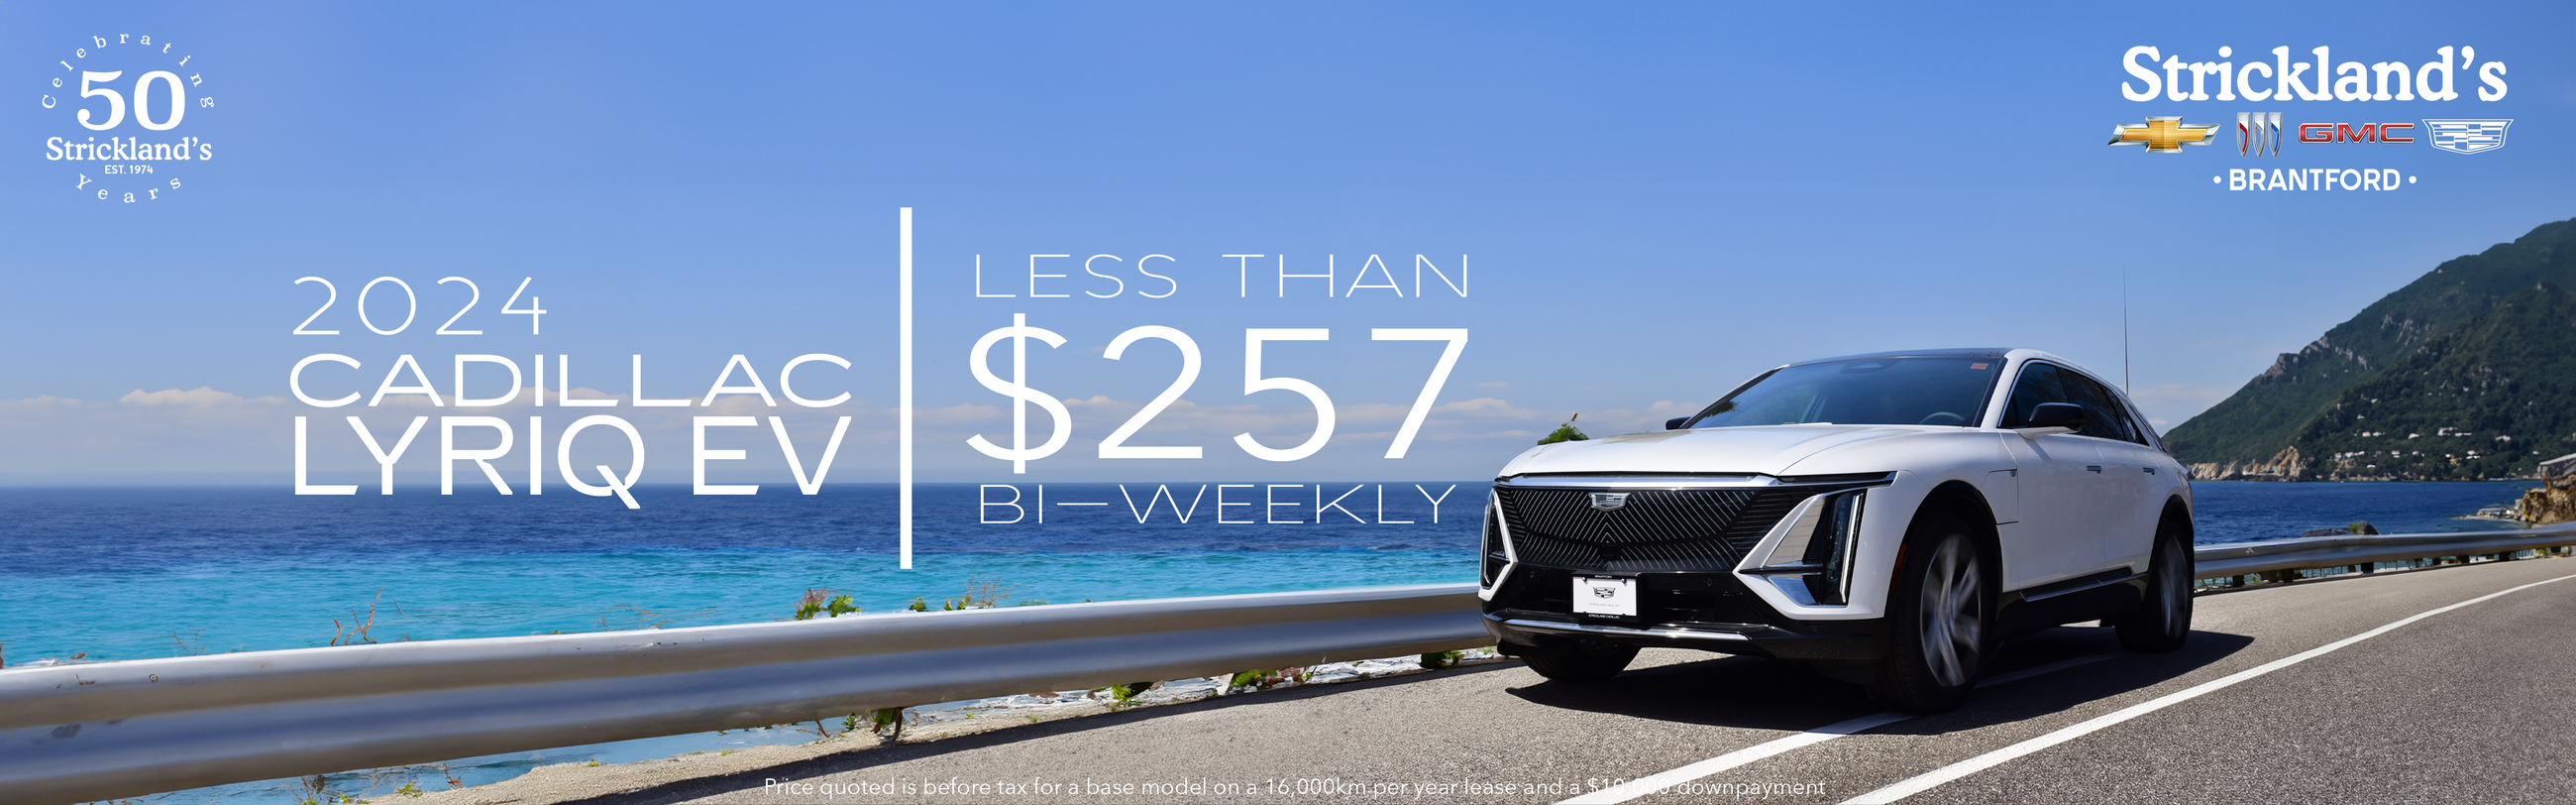 Cadillac Lyric Less than $257 Bi-weekly